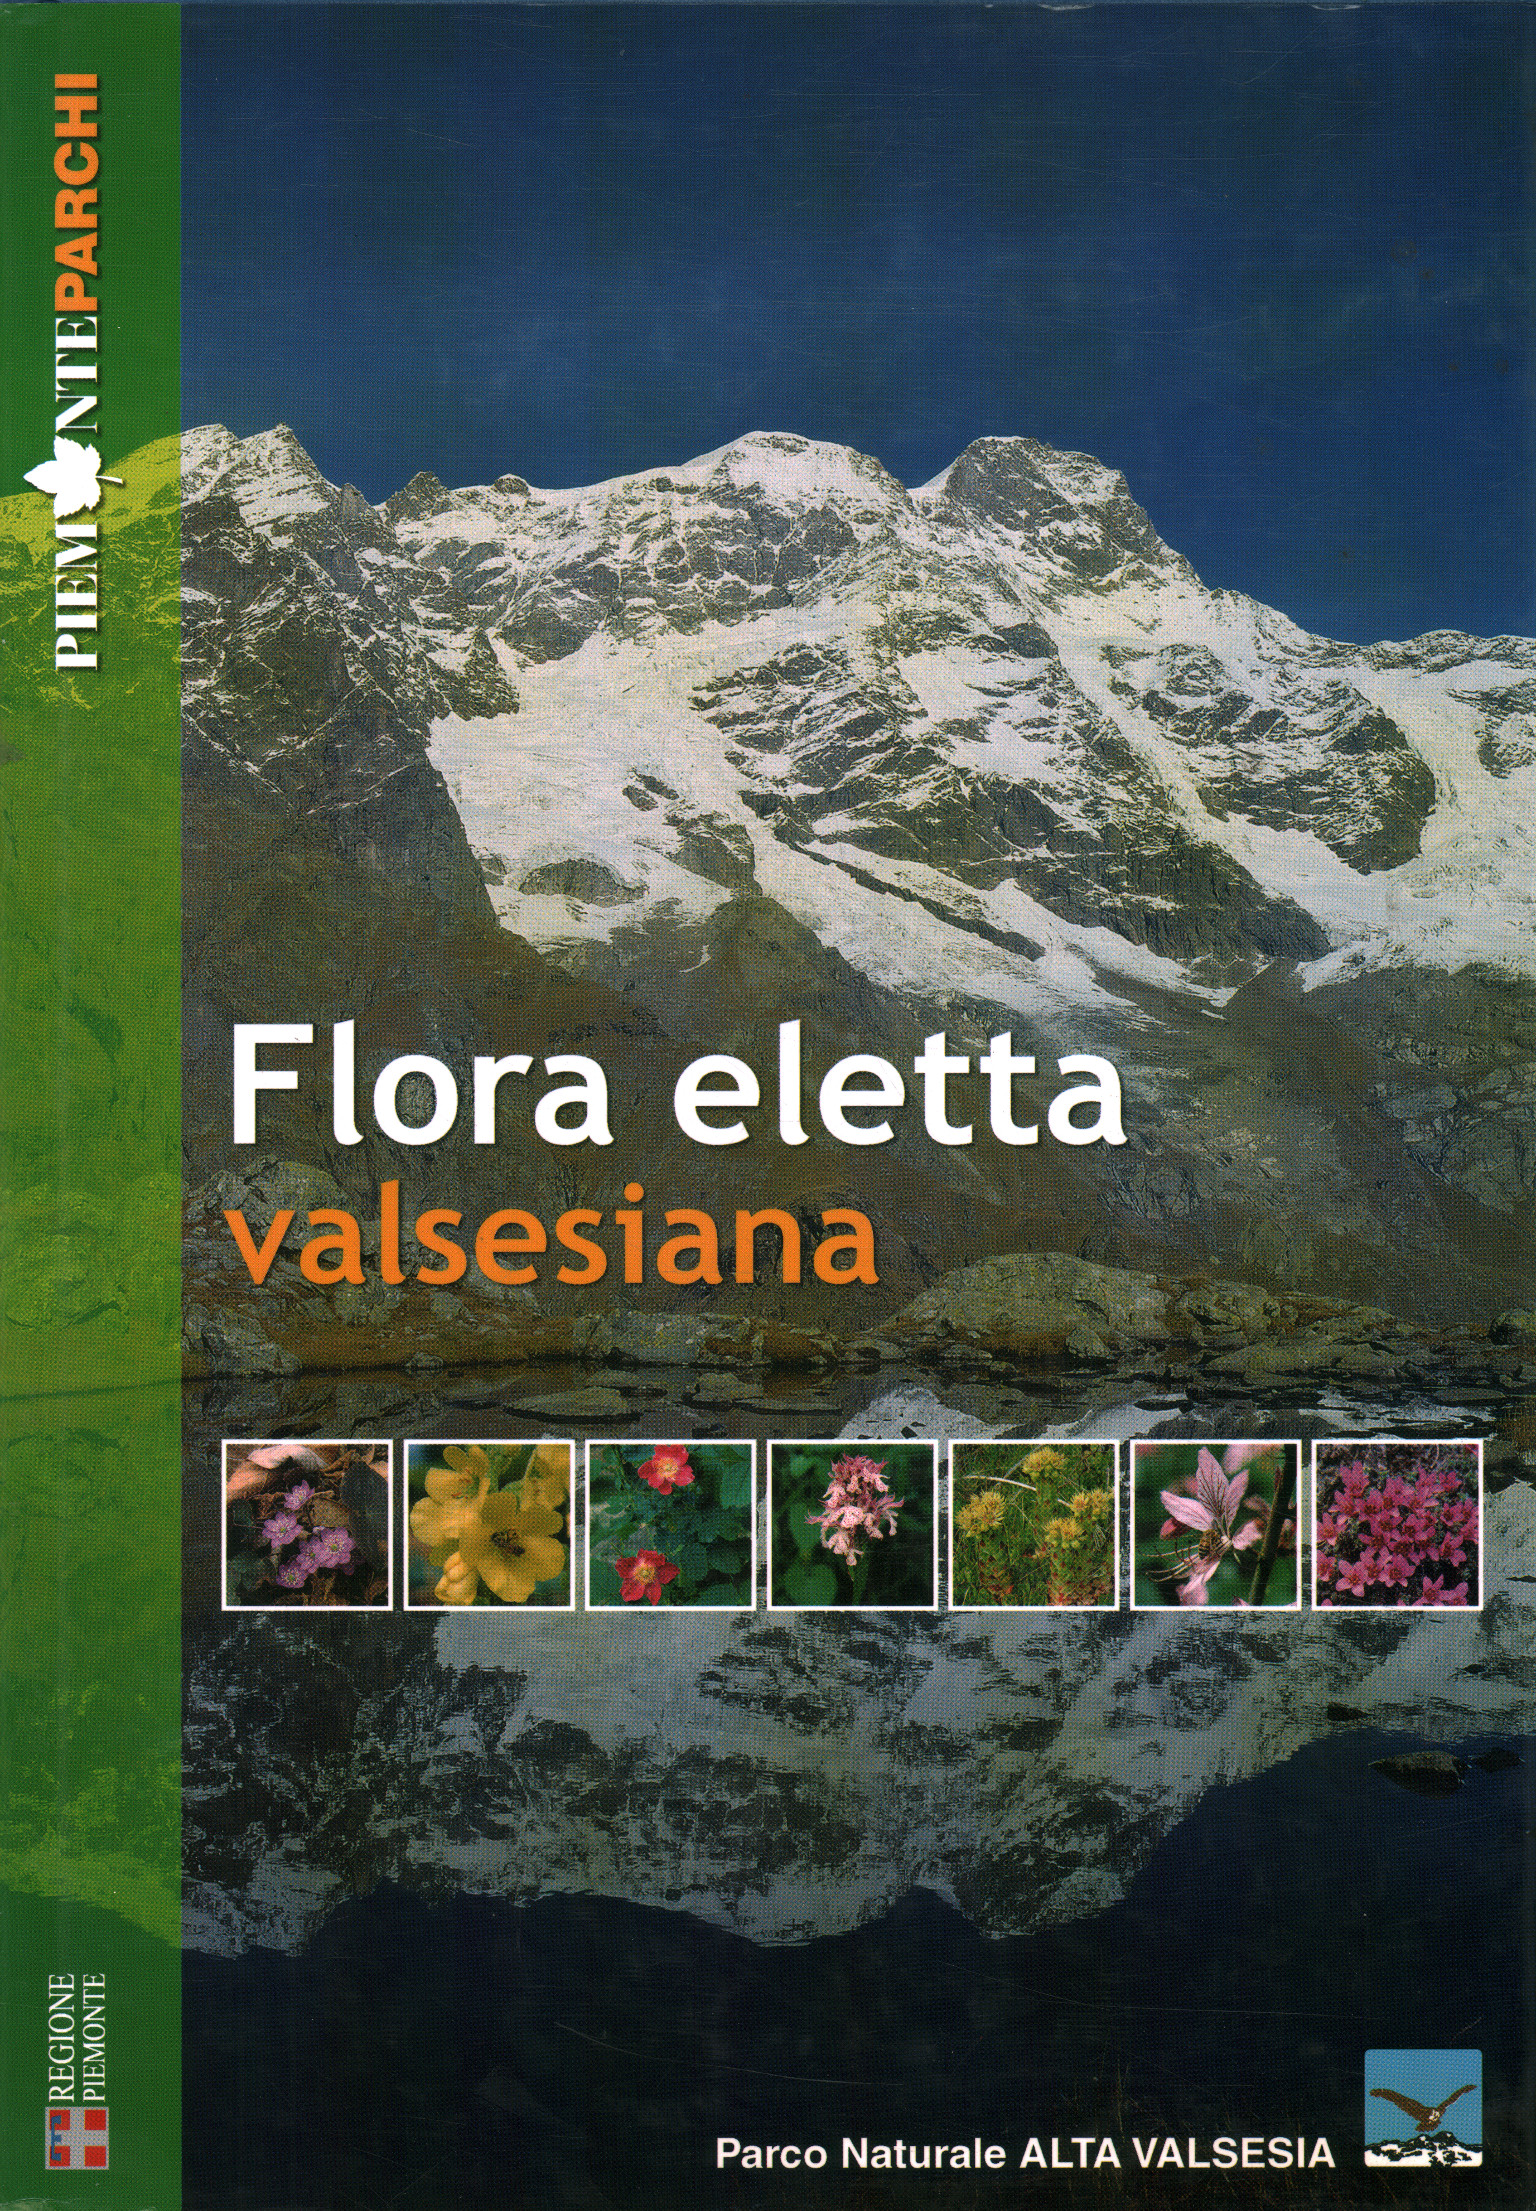 Flora ausgewählt aus Valsesiana